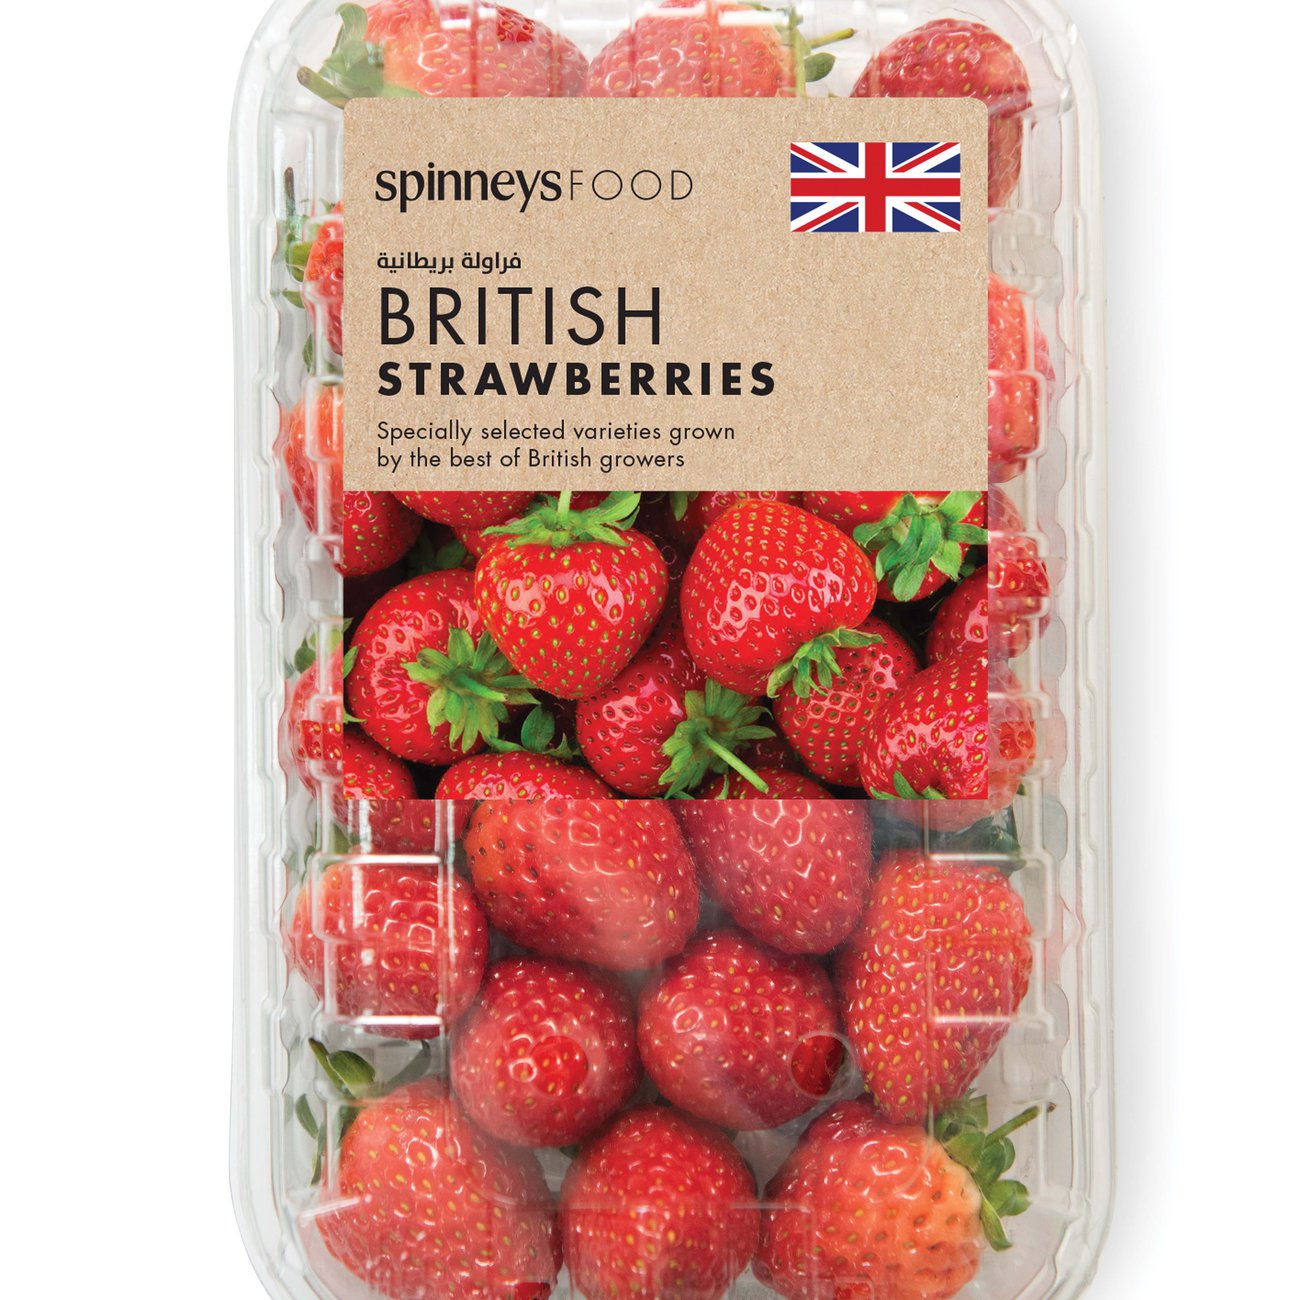 SpinneysFOOD British strawberries from Hall Hunter